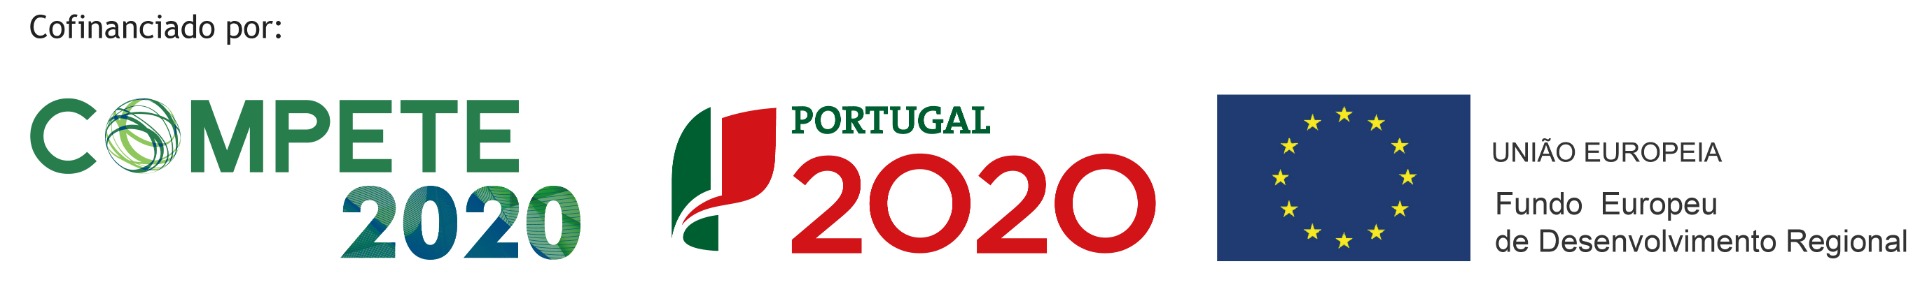 cofinanciado compete 2020 portugal 2020 ue